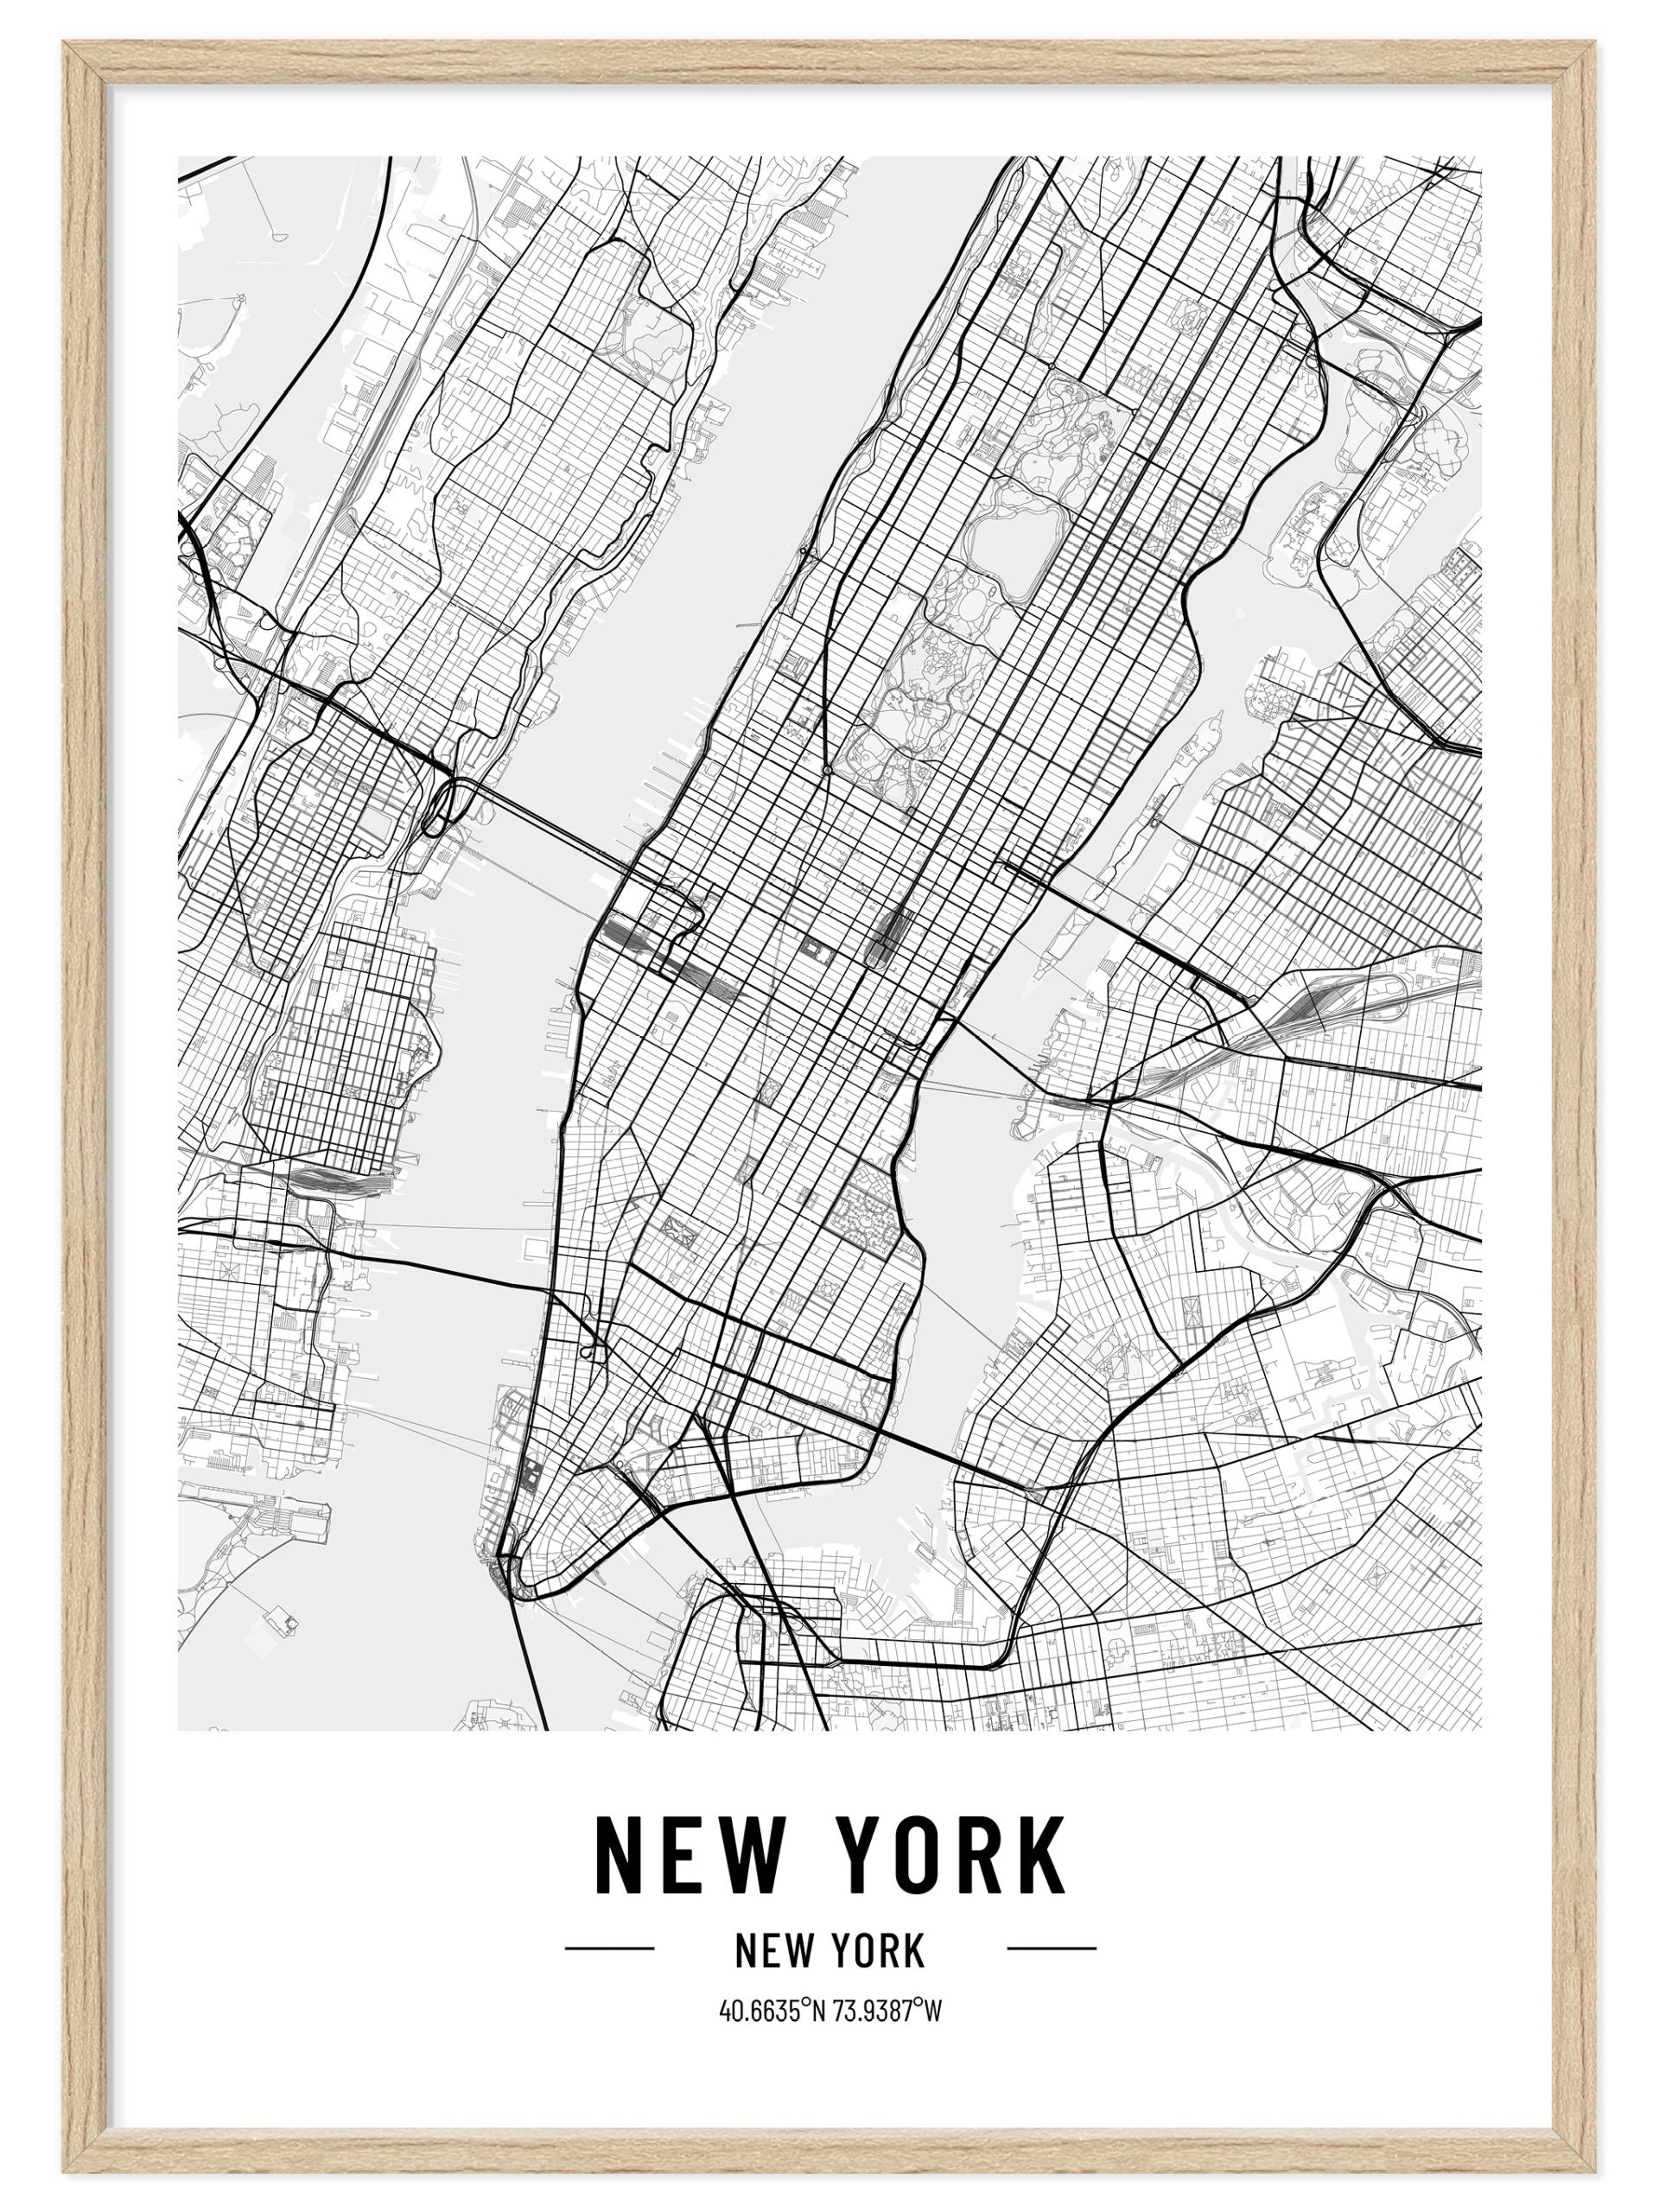 New York Poster